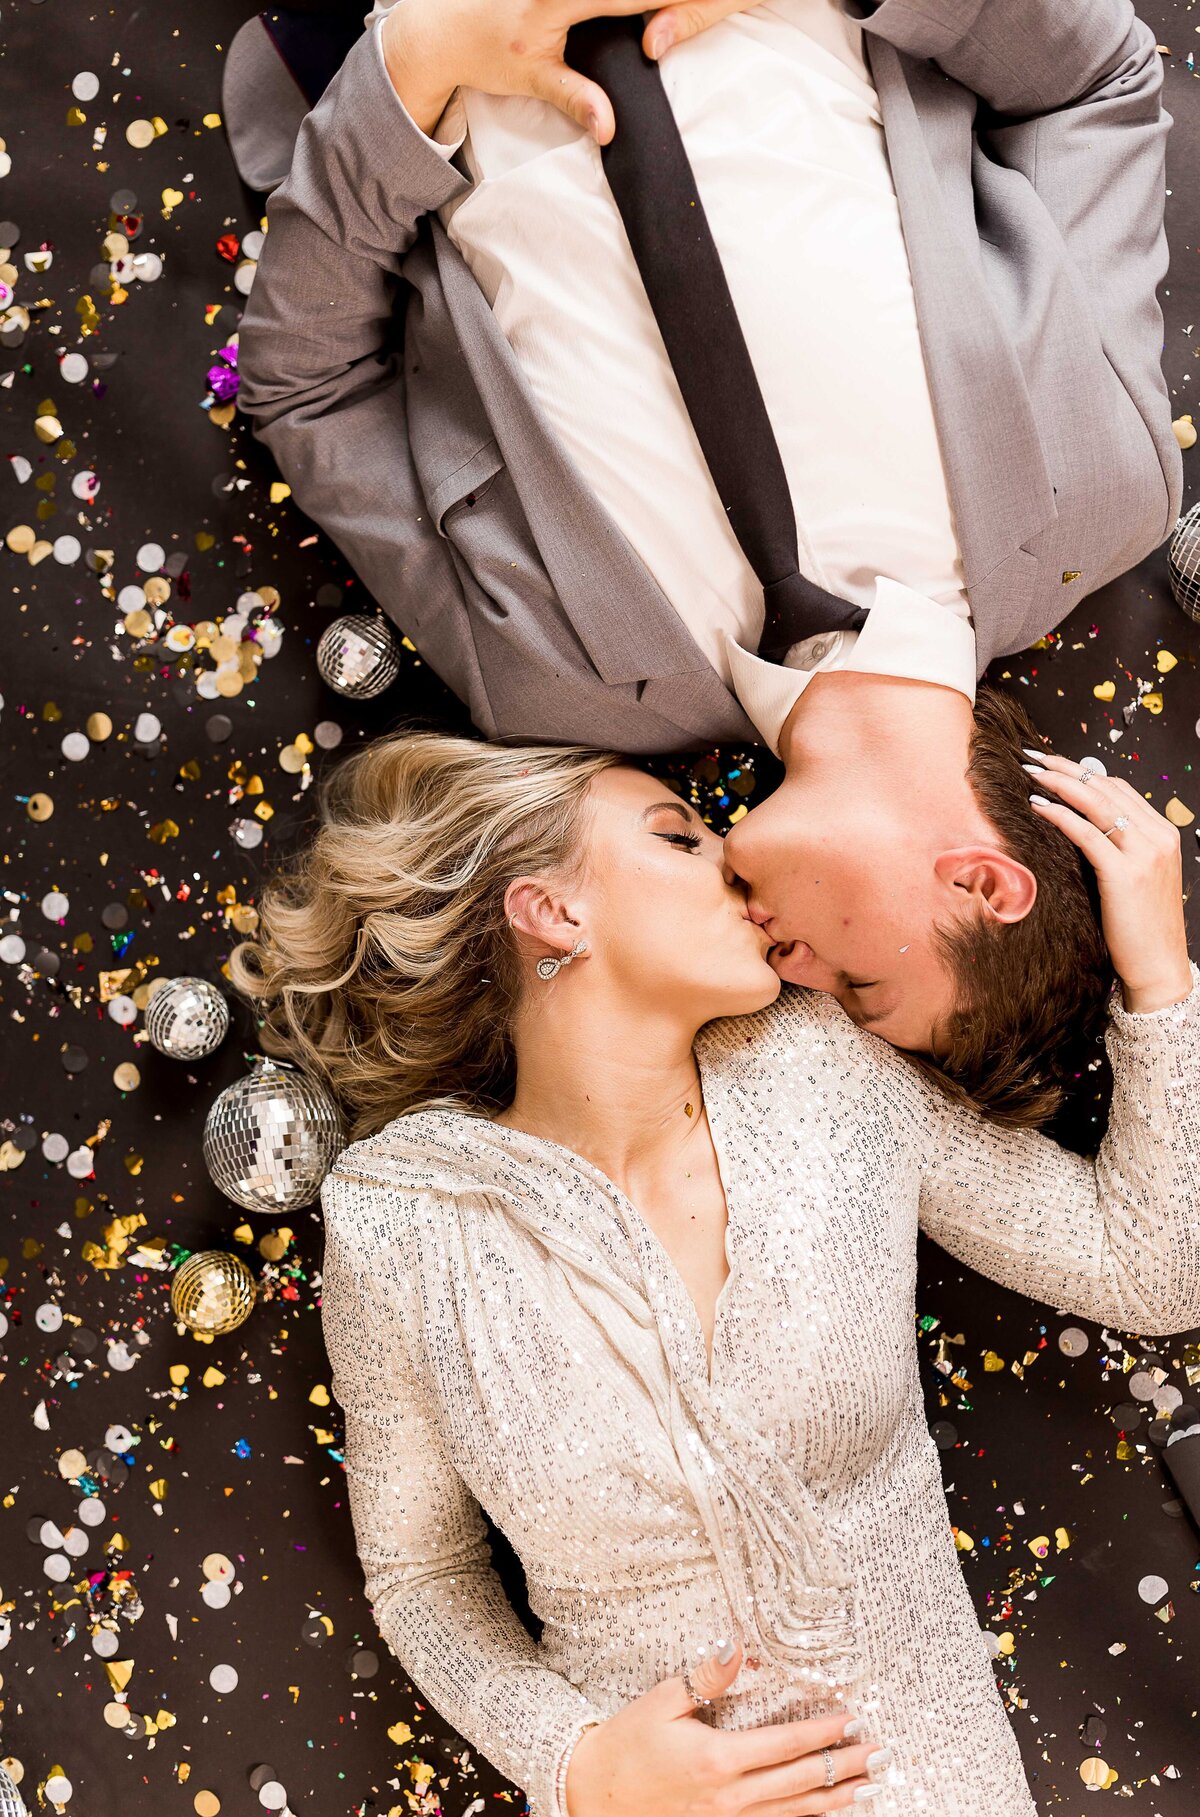 Disco Balls and Confetti in Bridal Photos in Logan, Utah by Robin Kunzler Photo